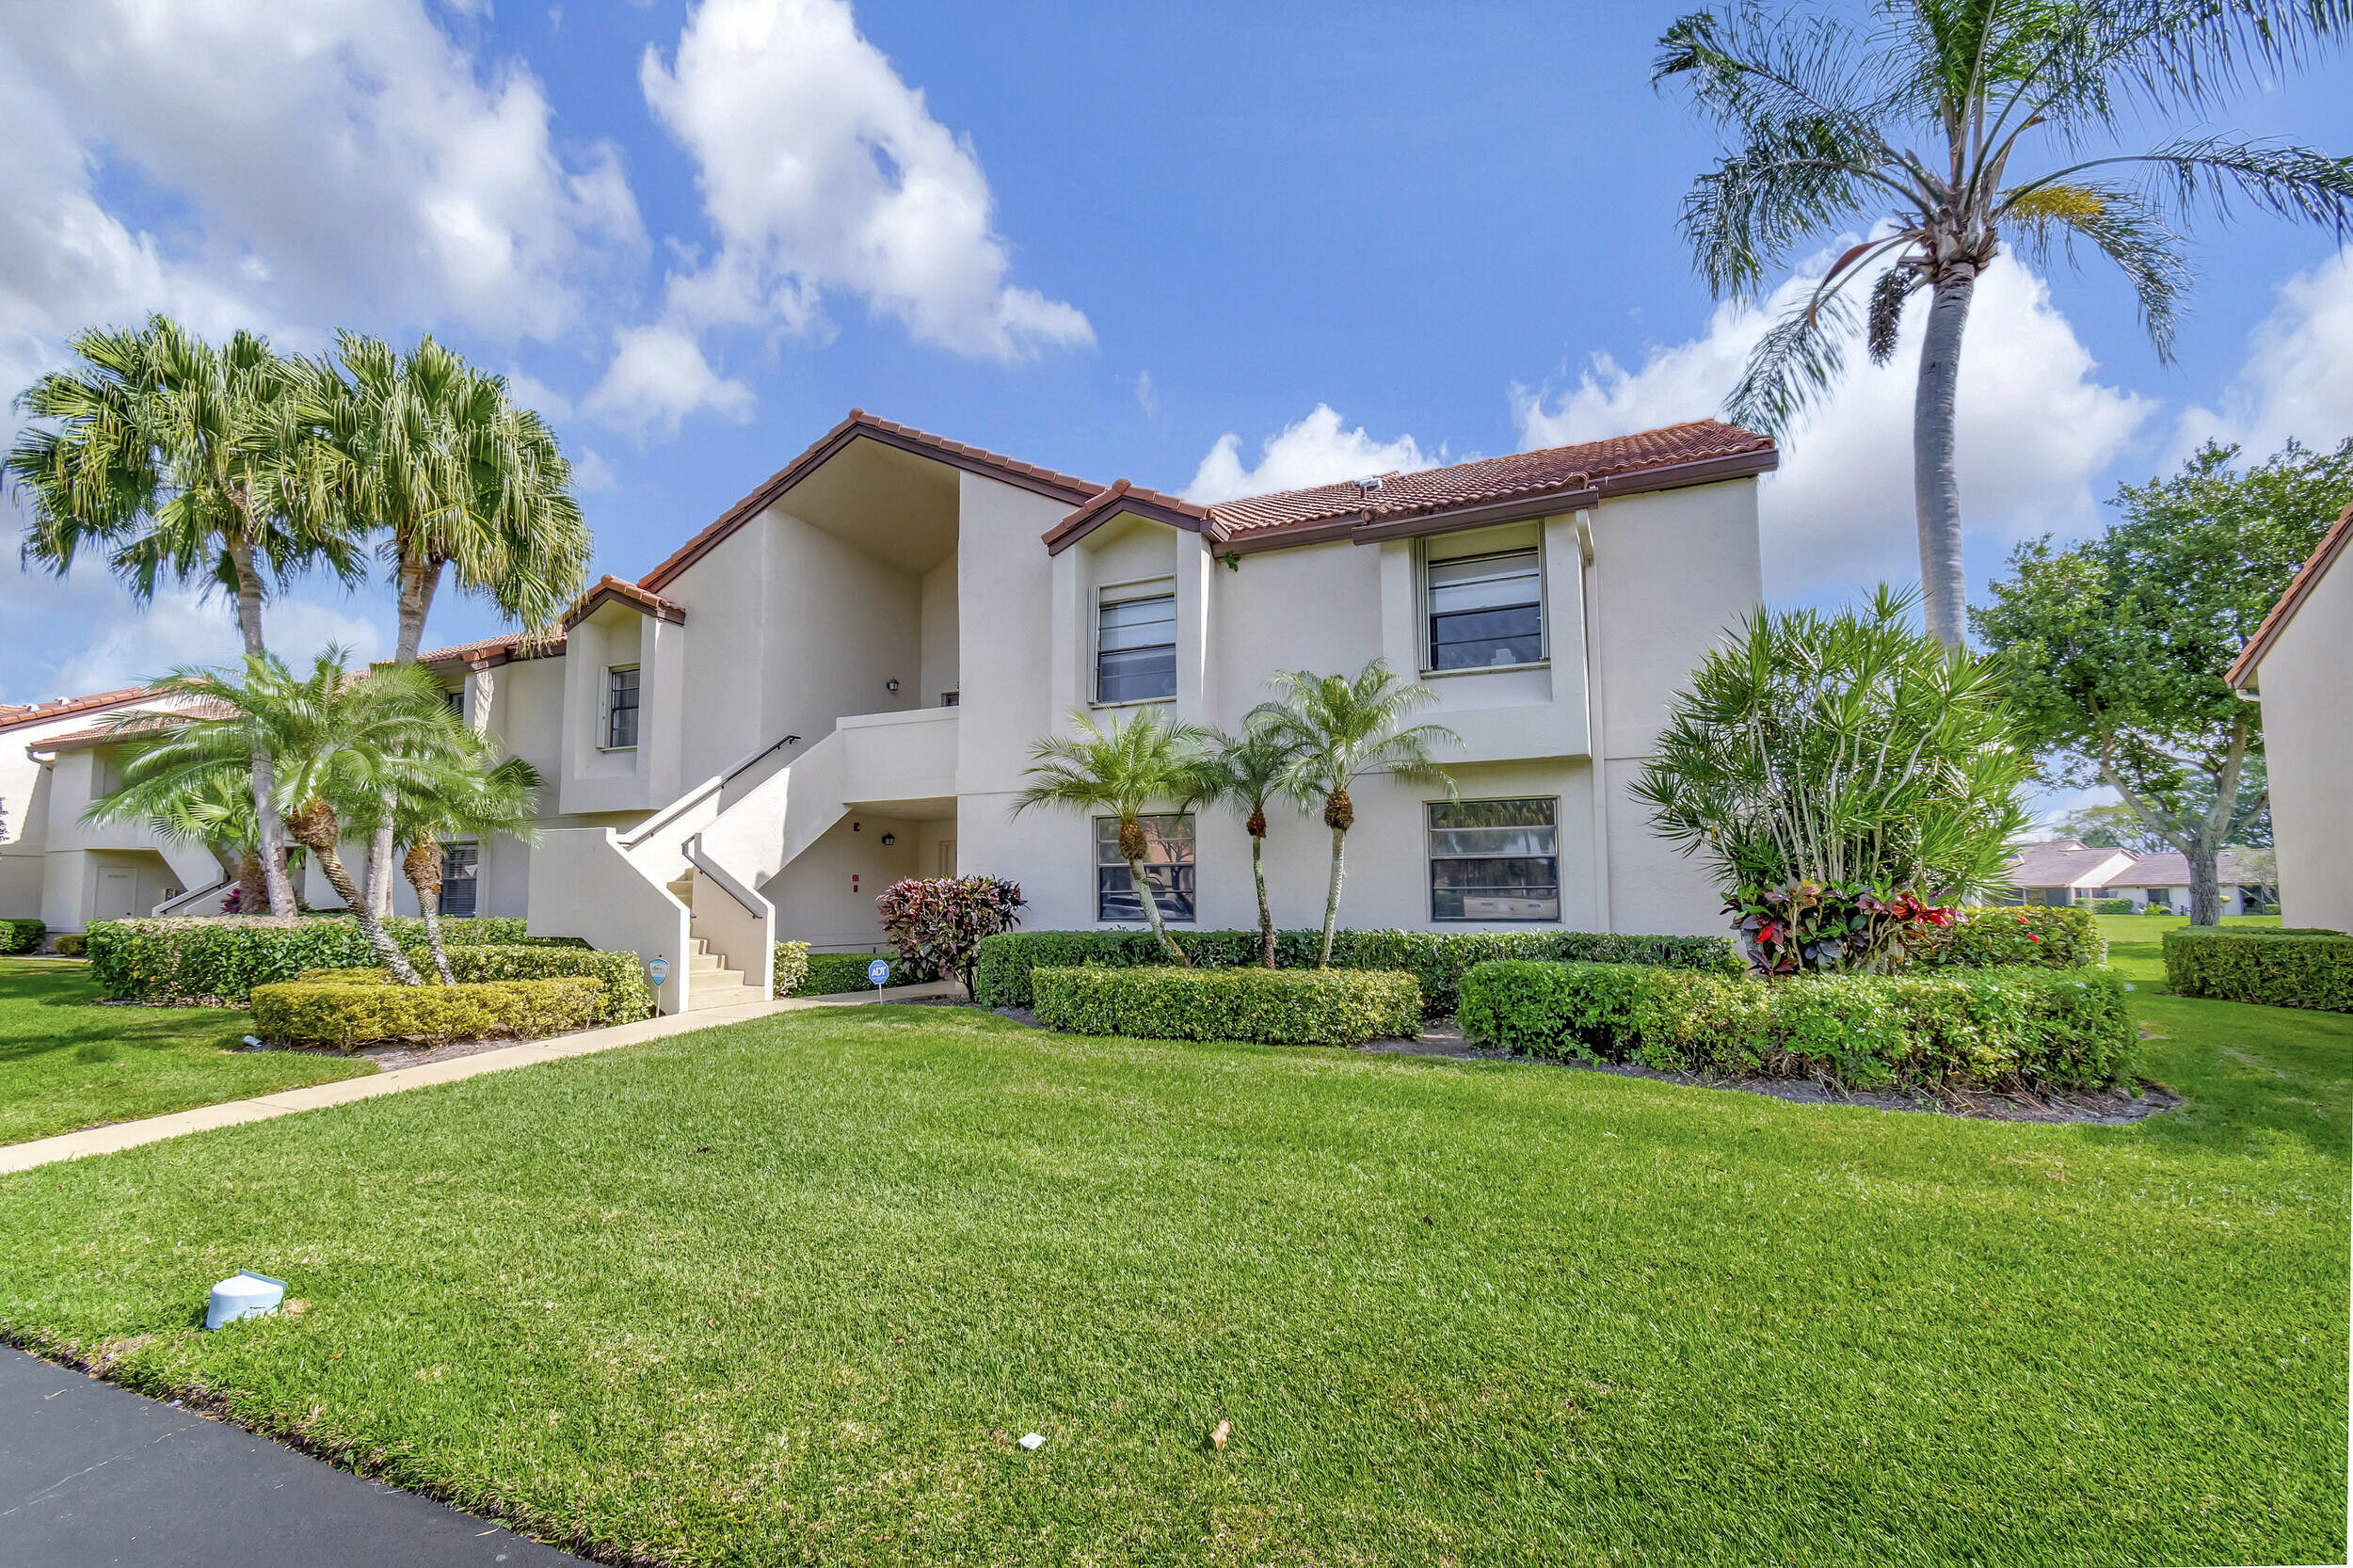 Property for Sale at 5823 Parkwalk Drive, Boynton Beach, Palm Beach County, Florida - Bedrooms: 3 
Bathrooms: 2  - $275,000